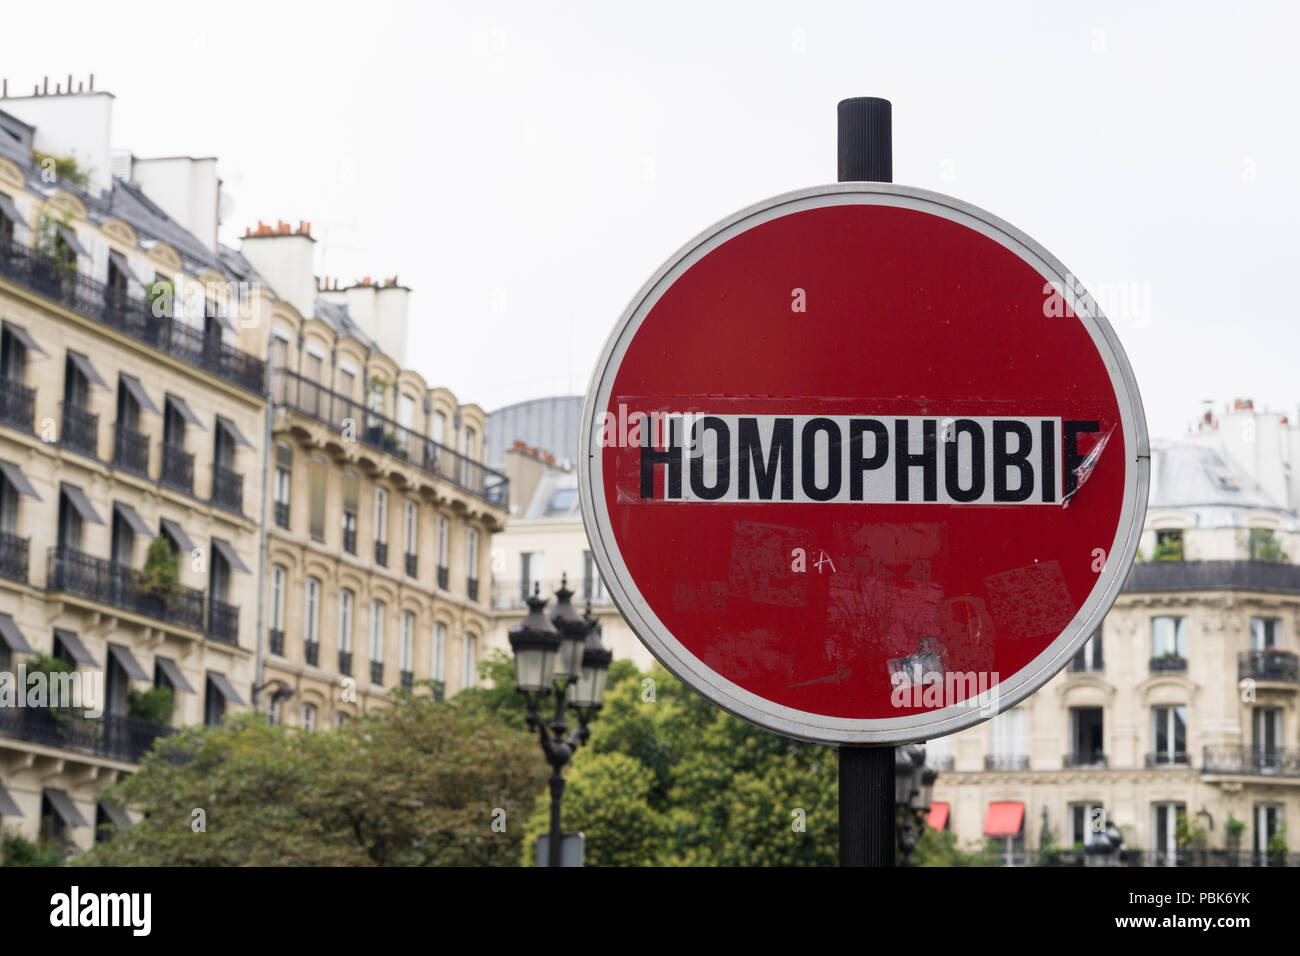 LGBT-Aktivismus - gegen Homophobie street art in Paris, Frankreich, Europa. Stockfoto